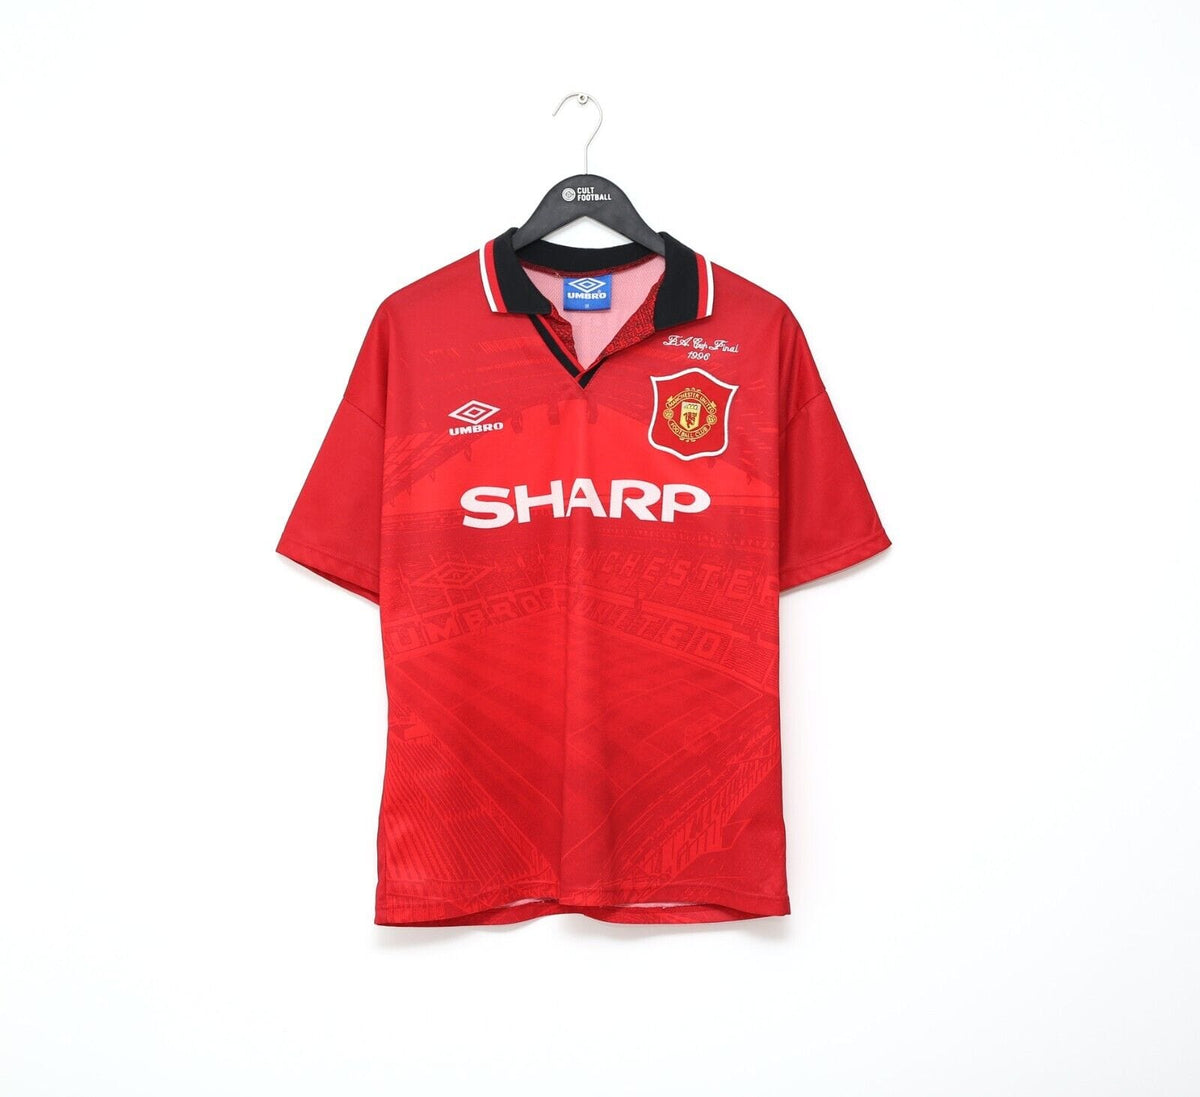 19996 CANTONA #7 Manchester United Vintage Umbro FA CUP FINAL Football Shirt (M)